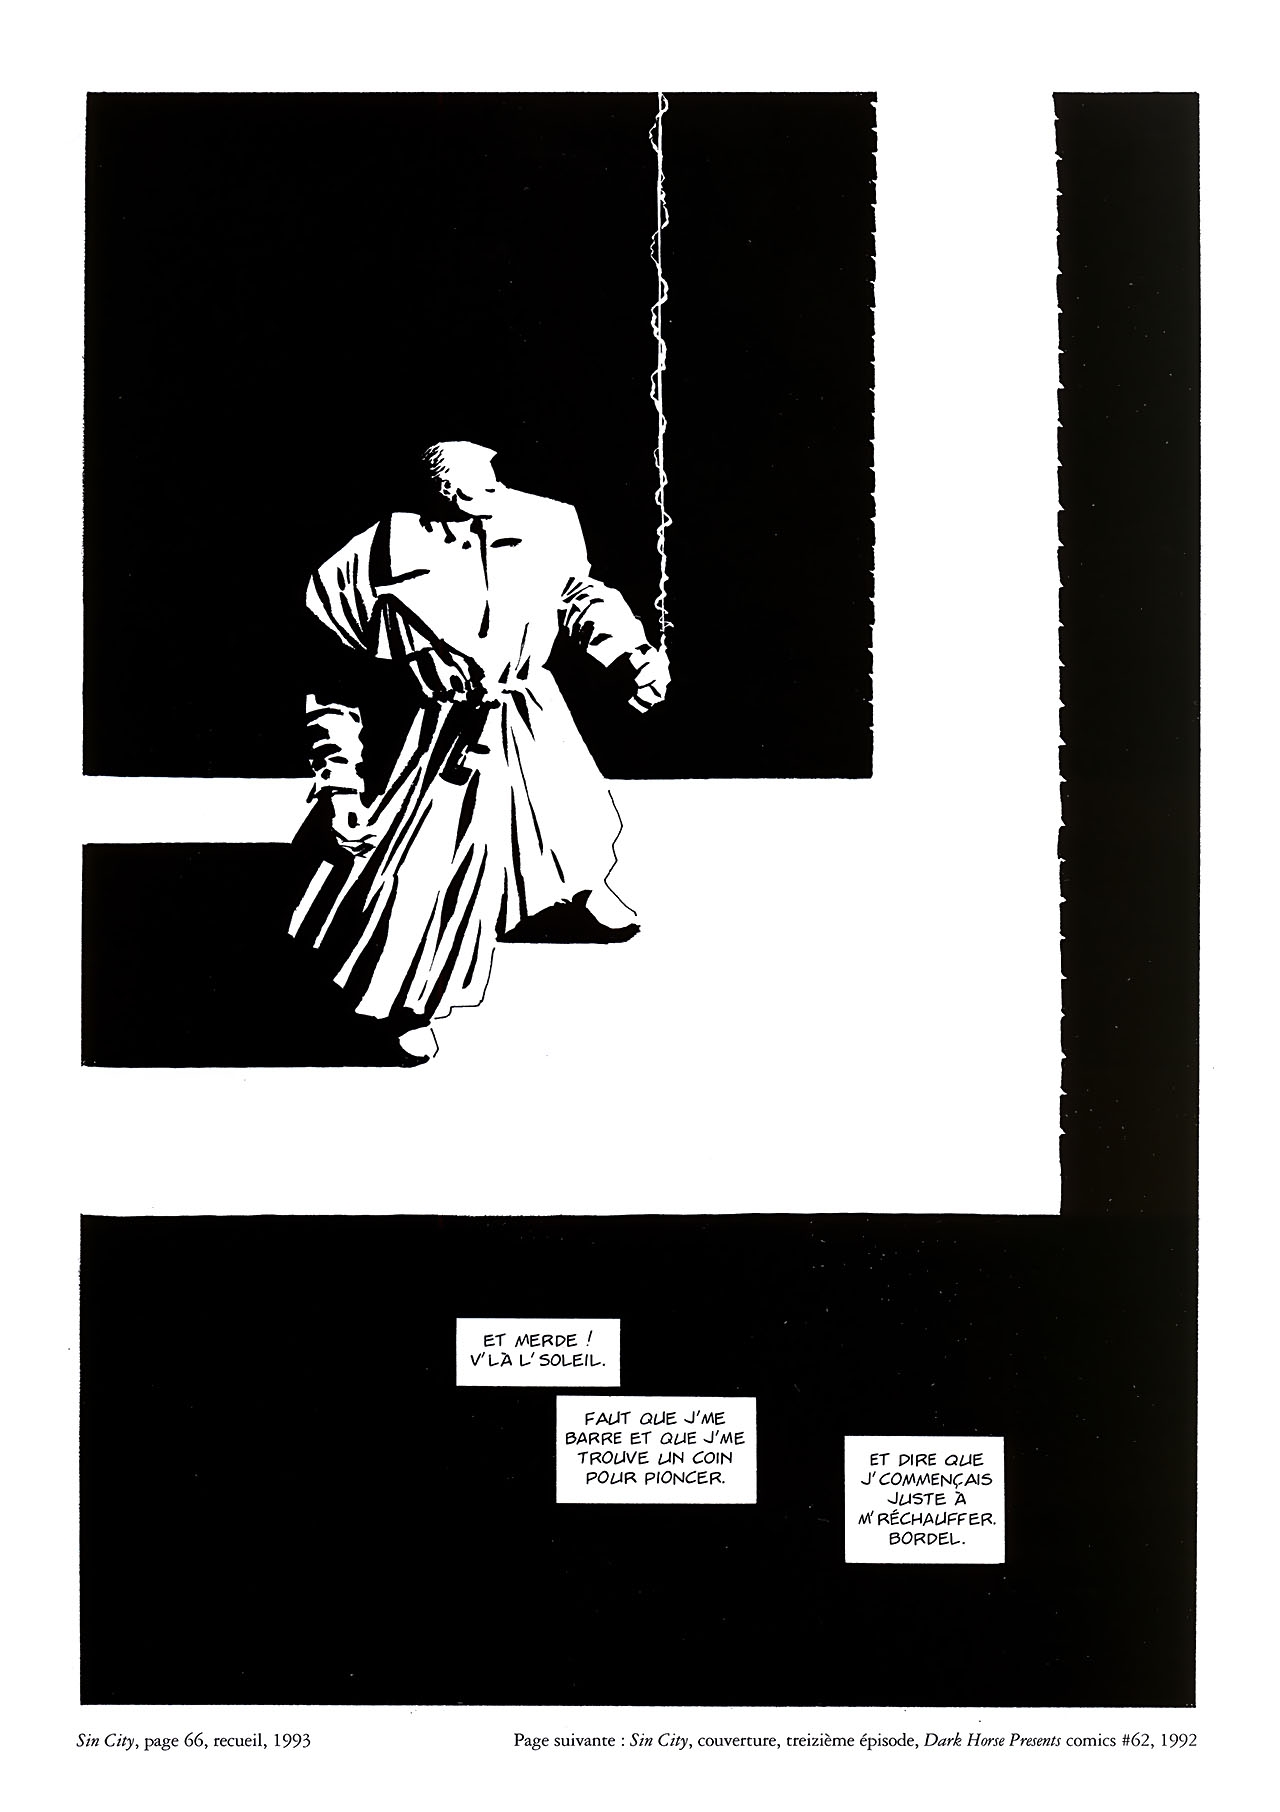 Frank Miller: The art of Sin City 30